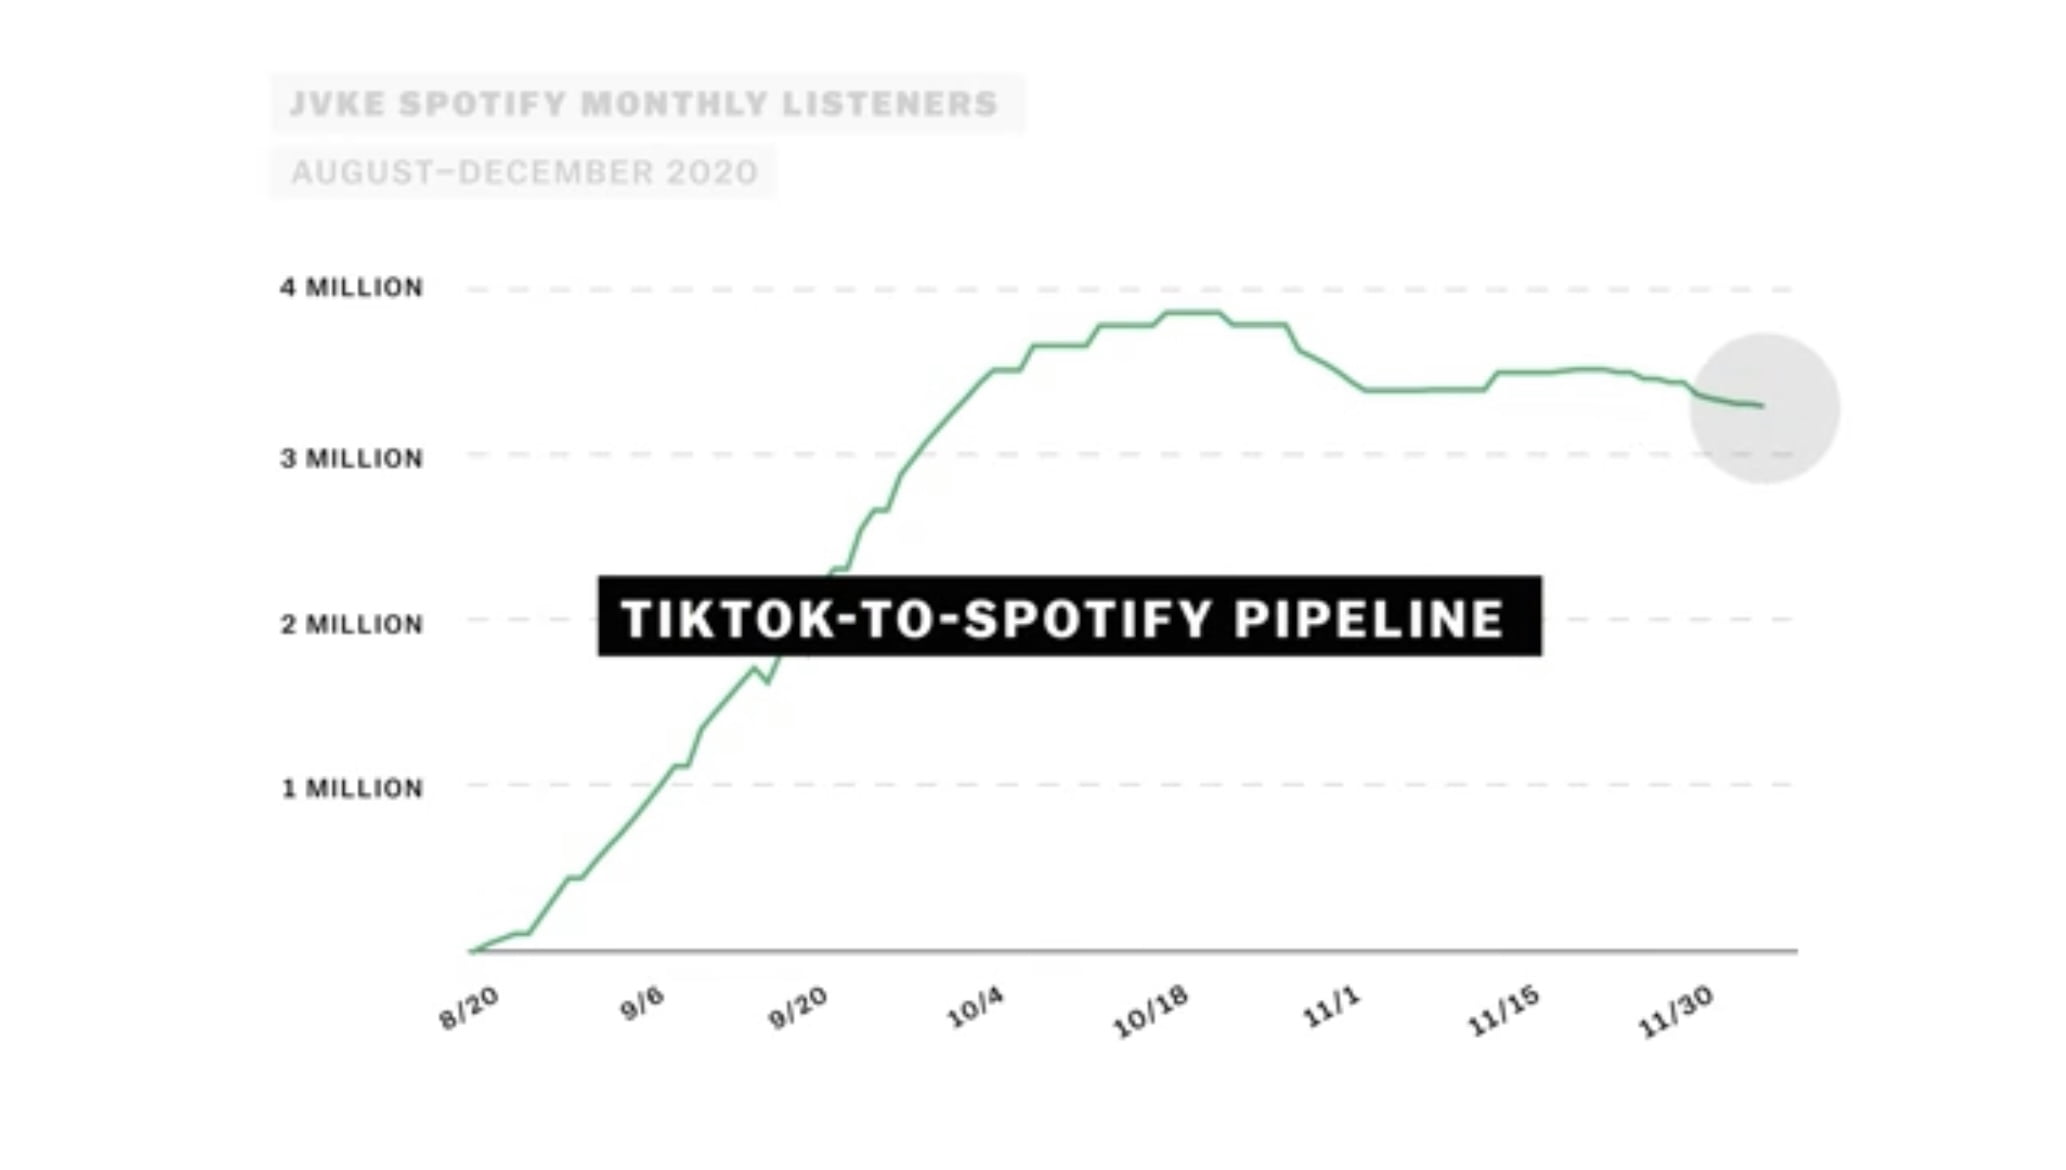 De TikTok-Spotify-Pipeline